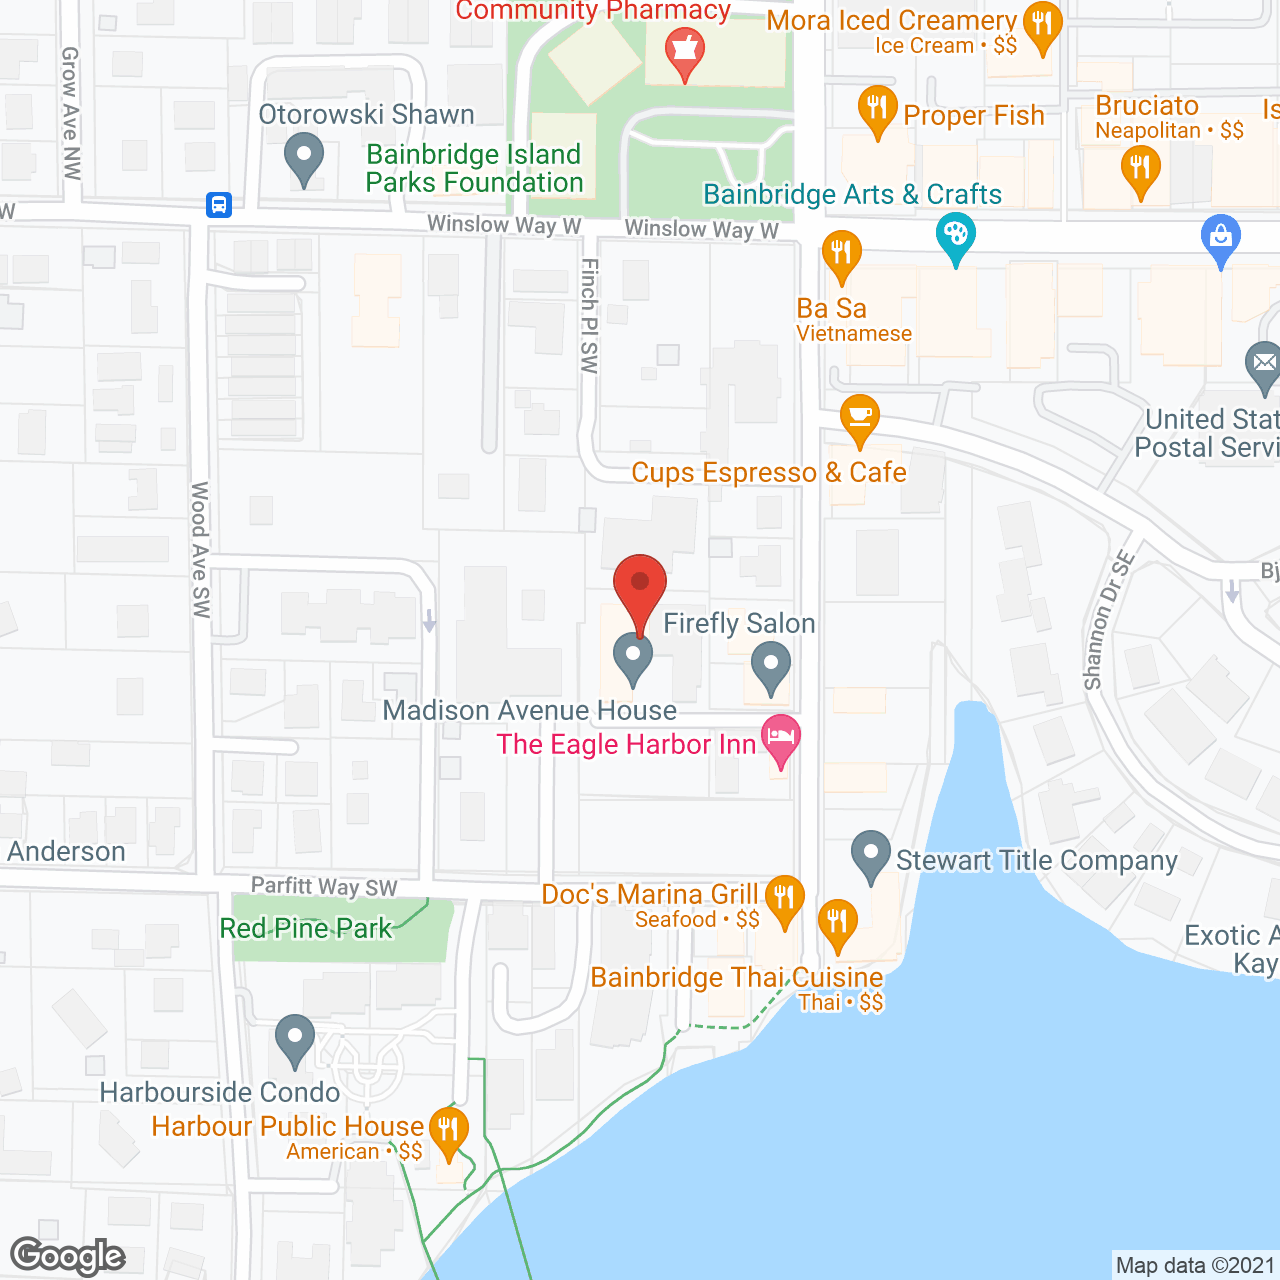 Madison Avenue Retirement Center in google map